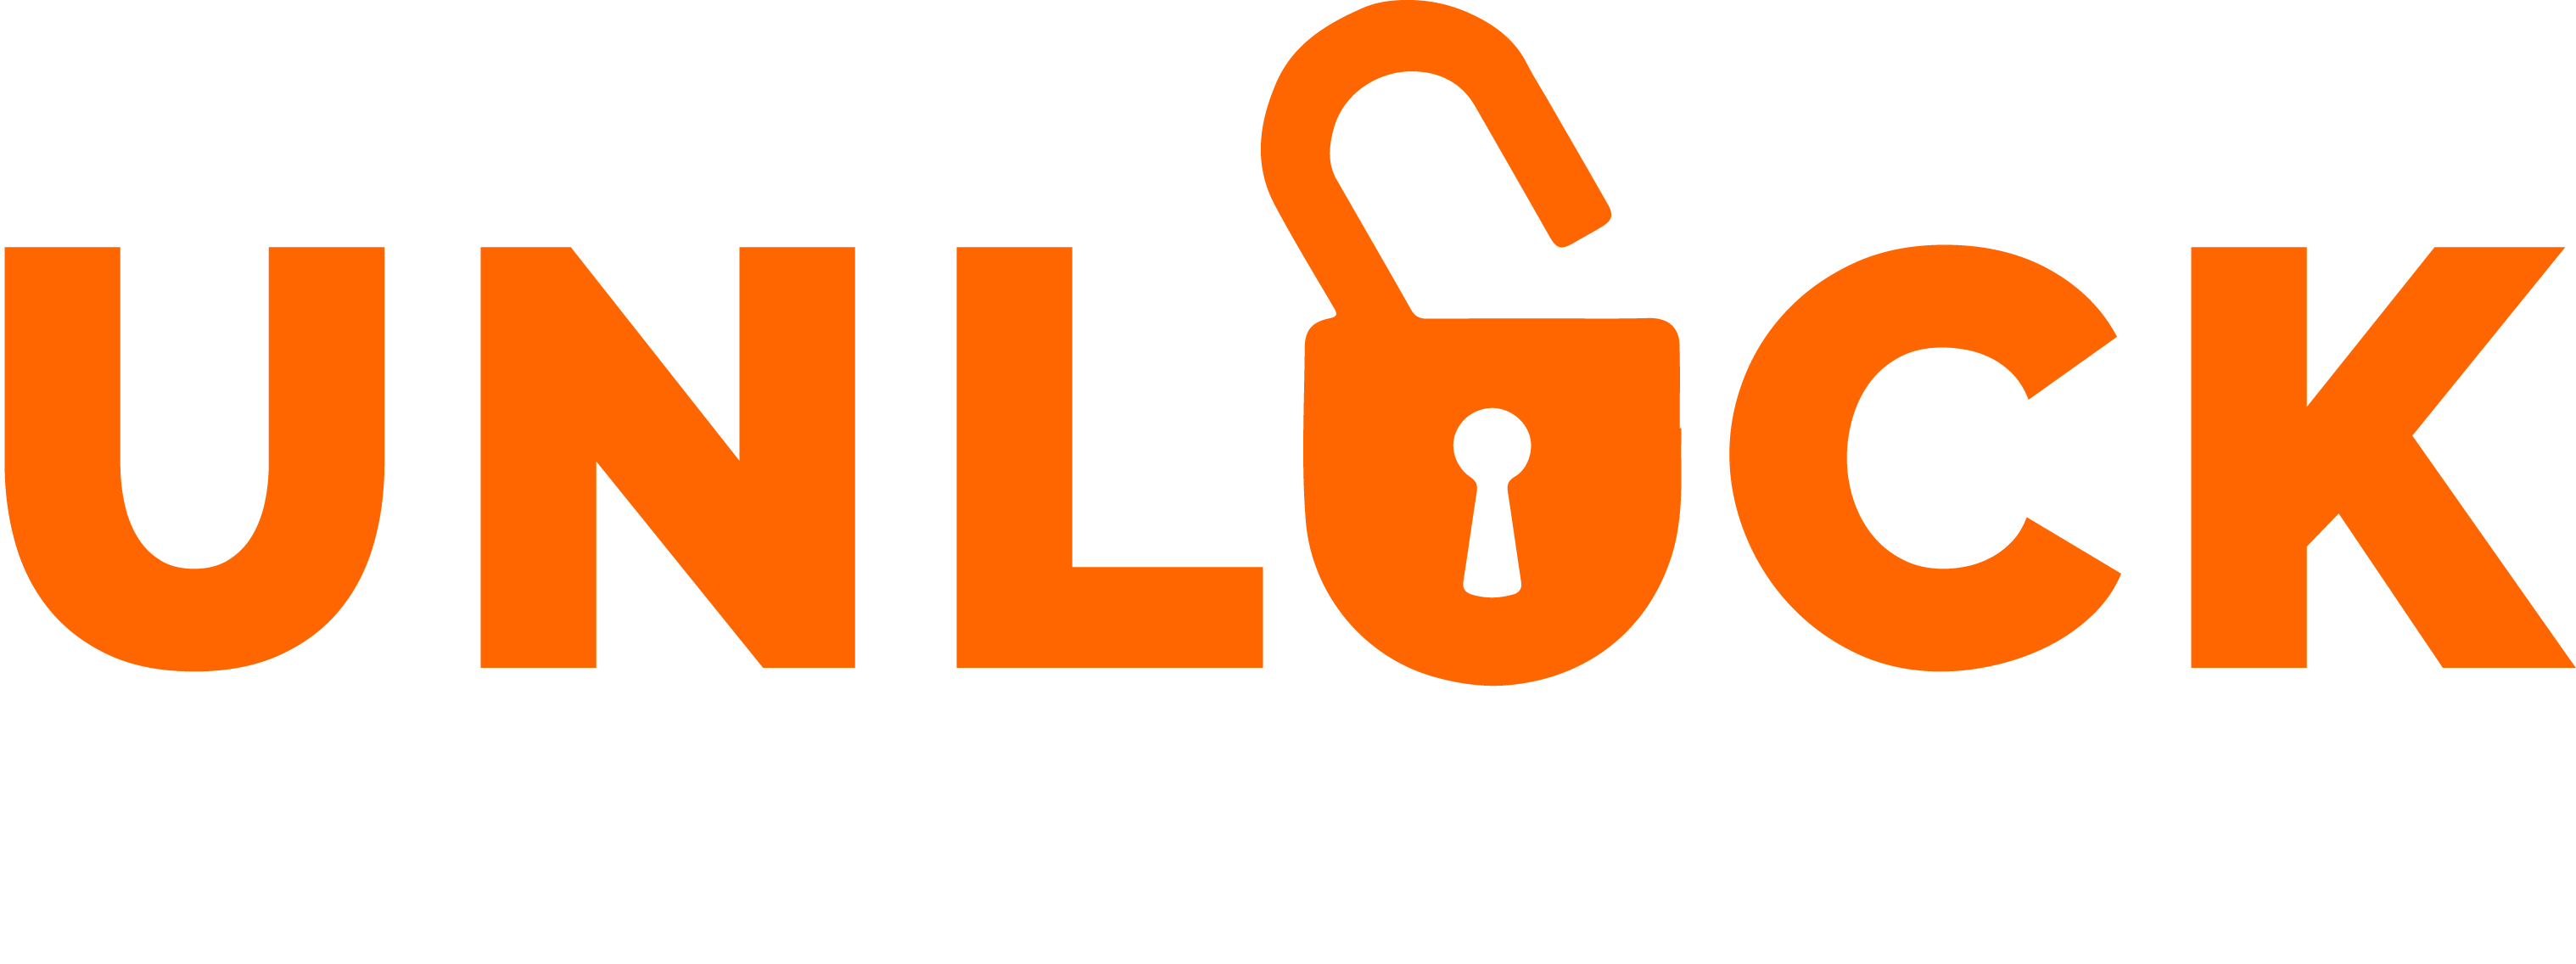 Unlock your lockdown